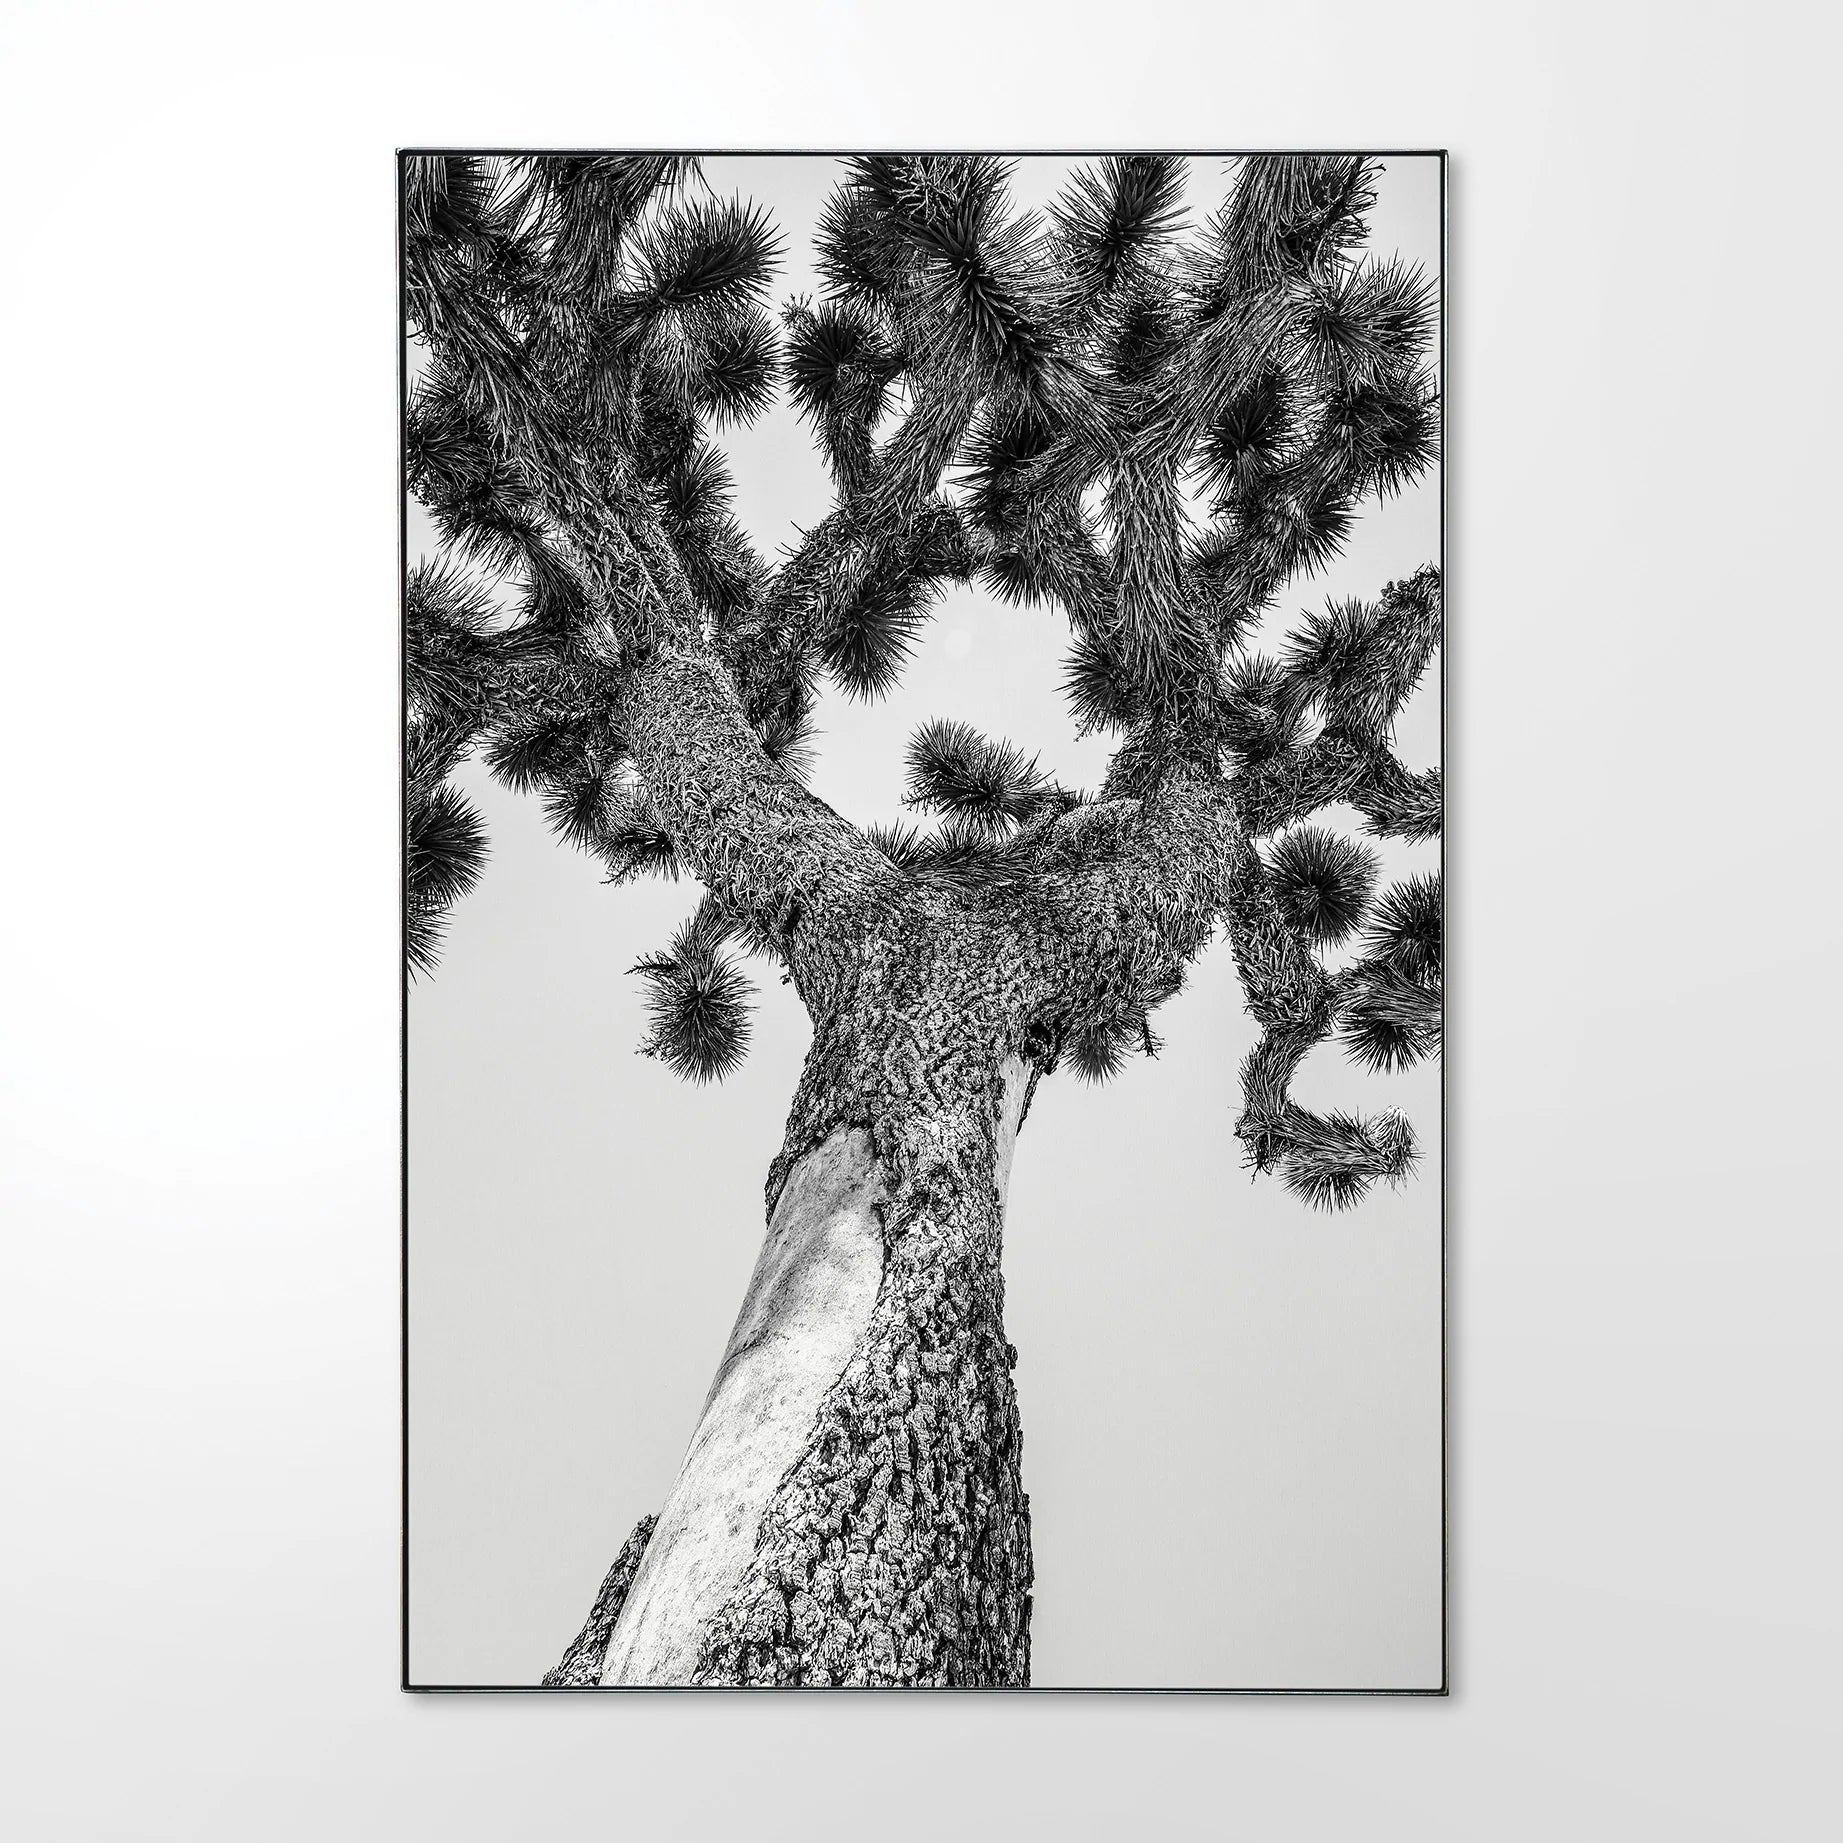 Joshua-tree.jpg